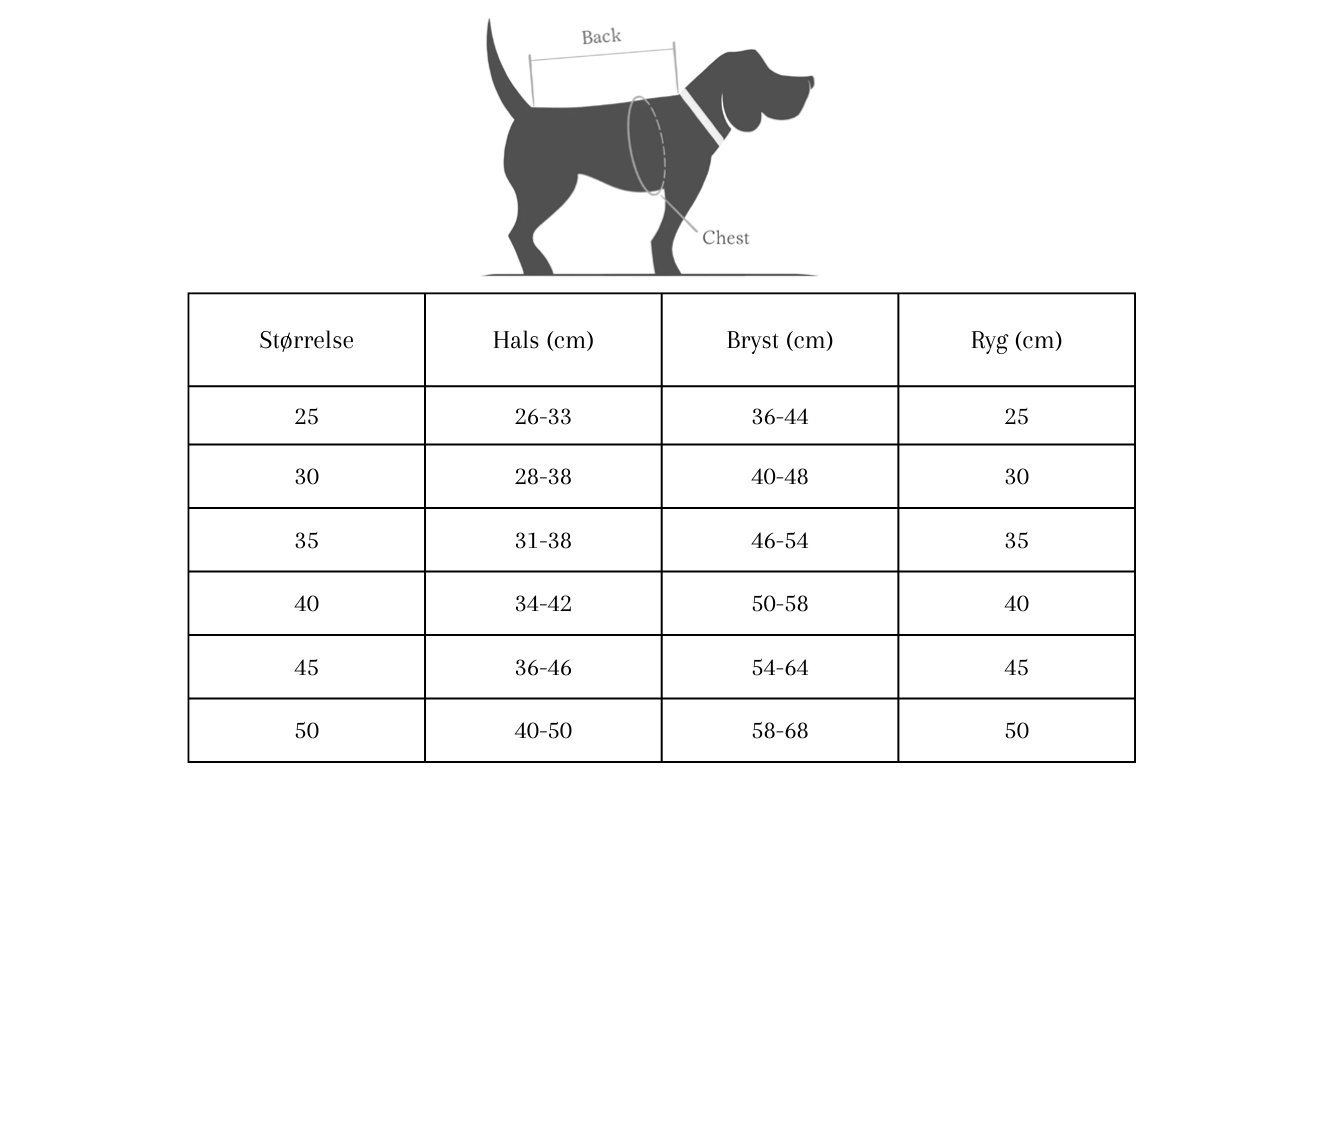 Hunter - Malmø hundesweater, grå